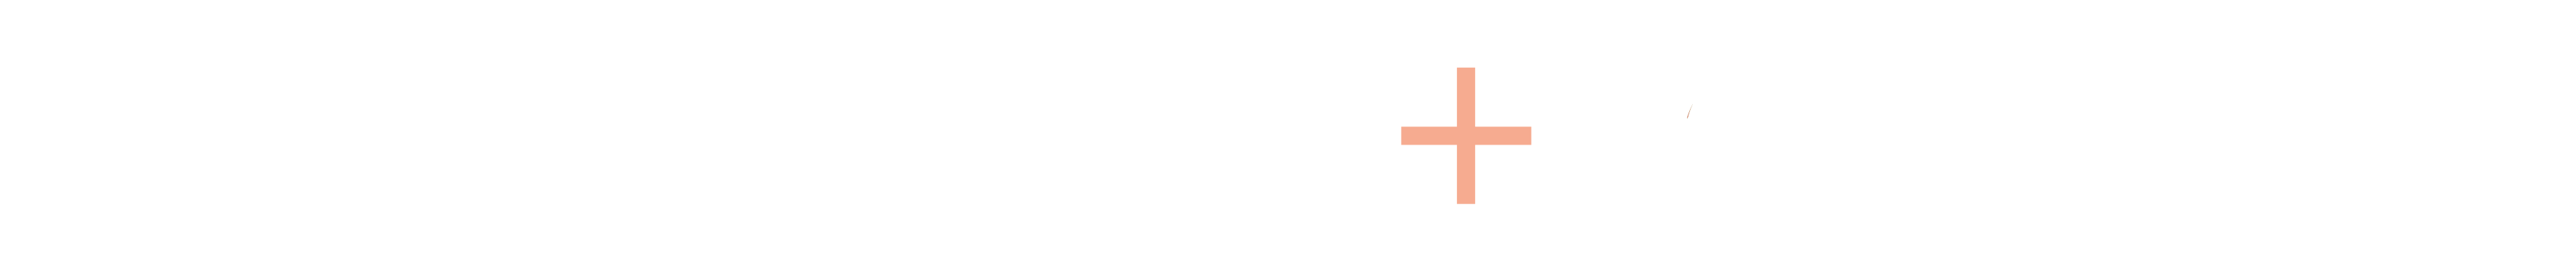 Pacific Dataport + OneWeb logo